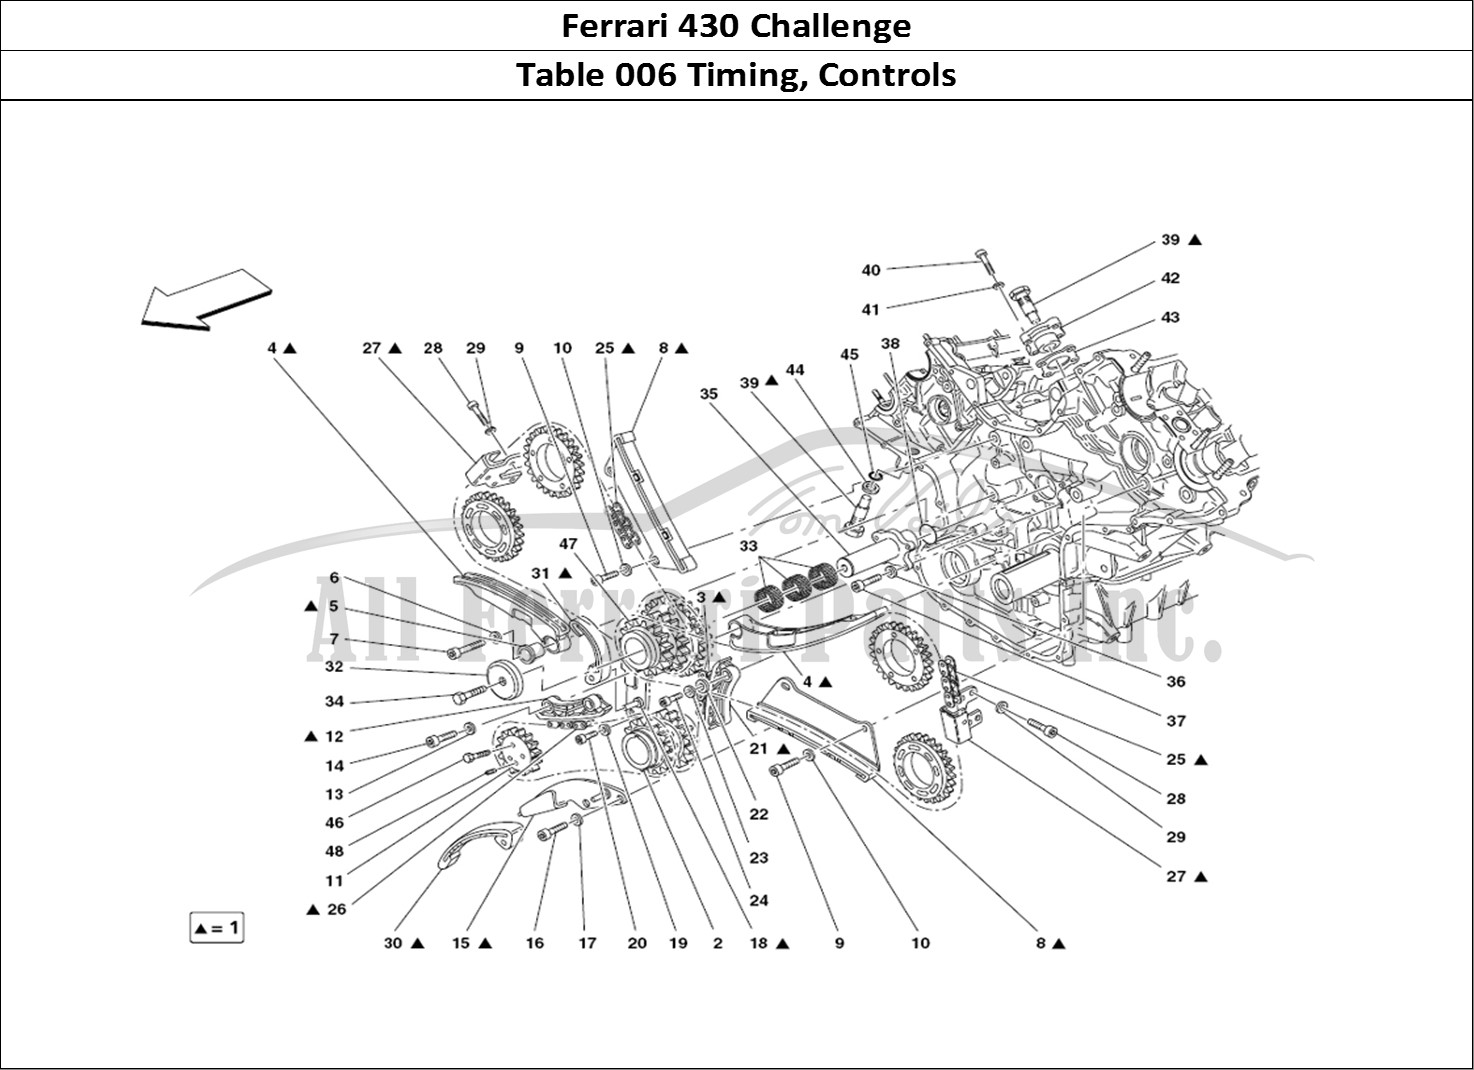 Ferrari Parts Ferrari 430 Challenge (2006) Page 006 Timing - Controls